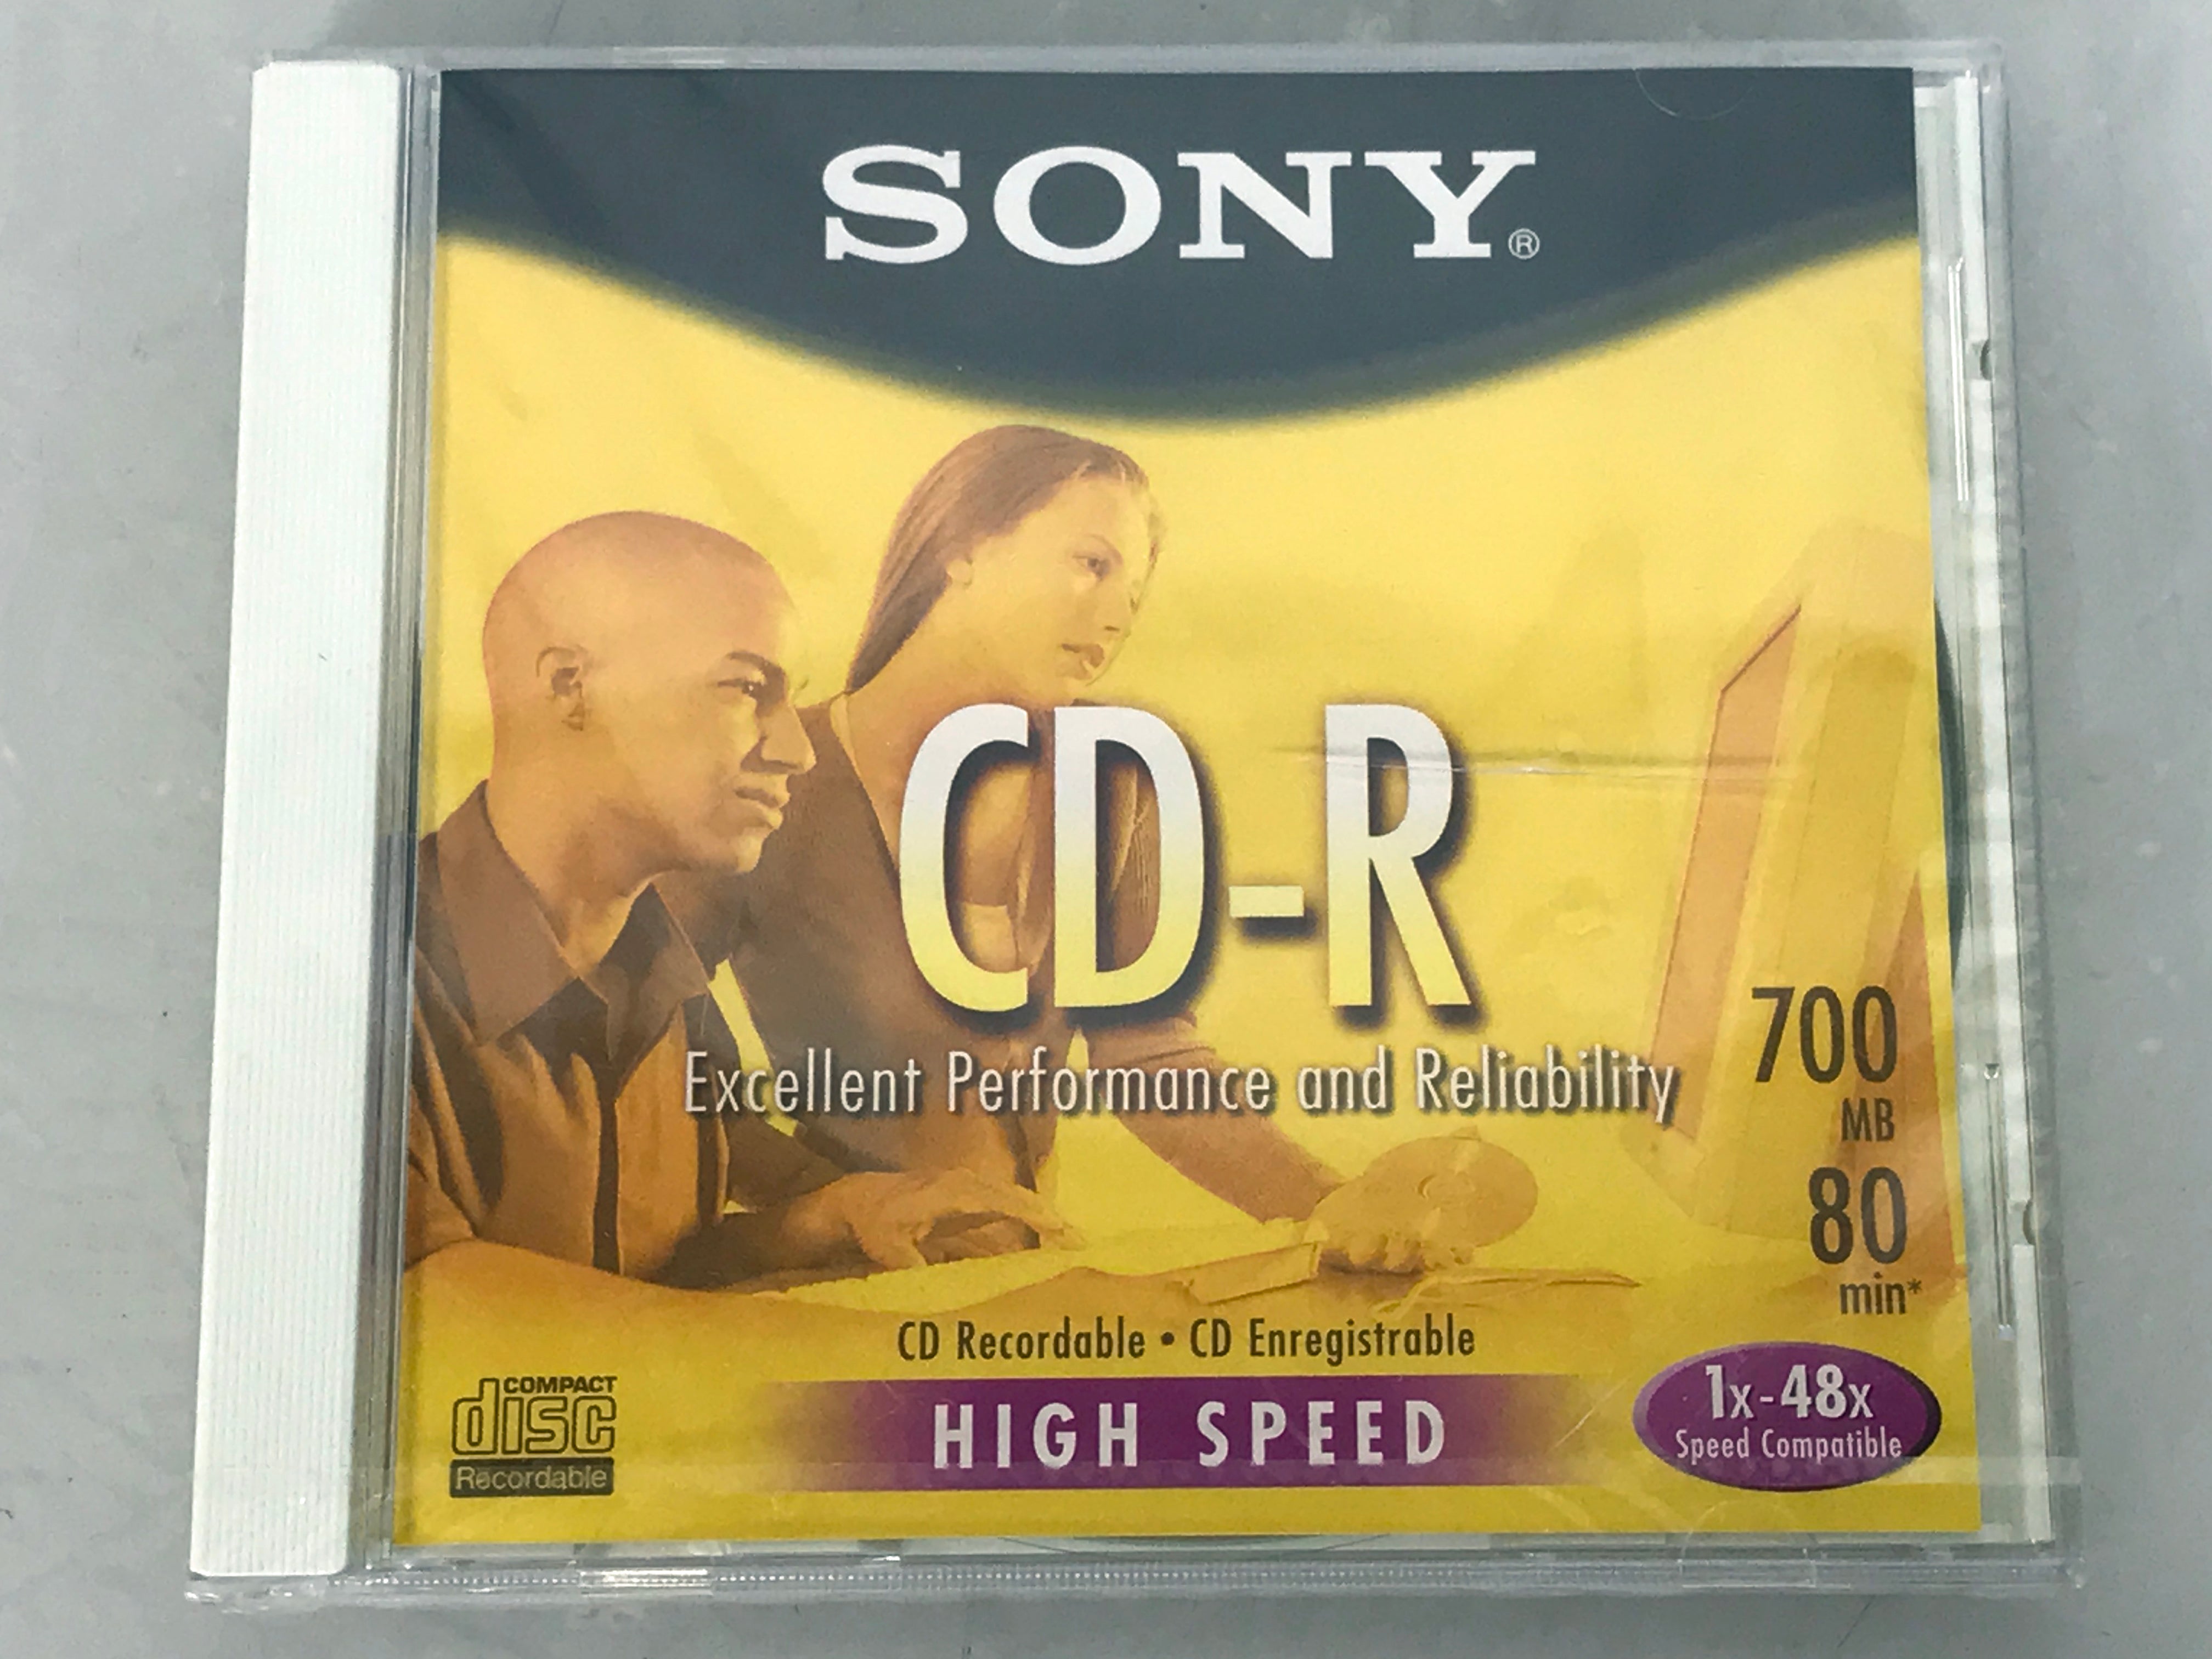 Sony 700MB 80min CD-R